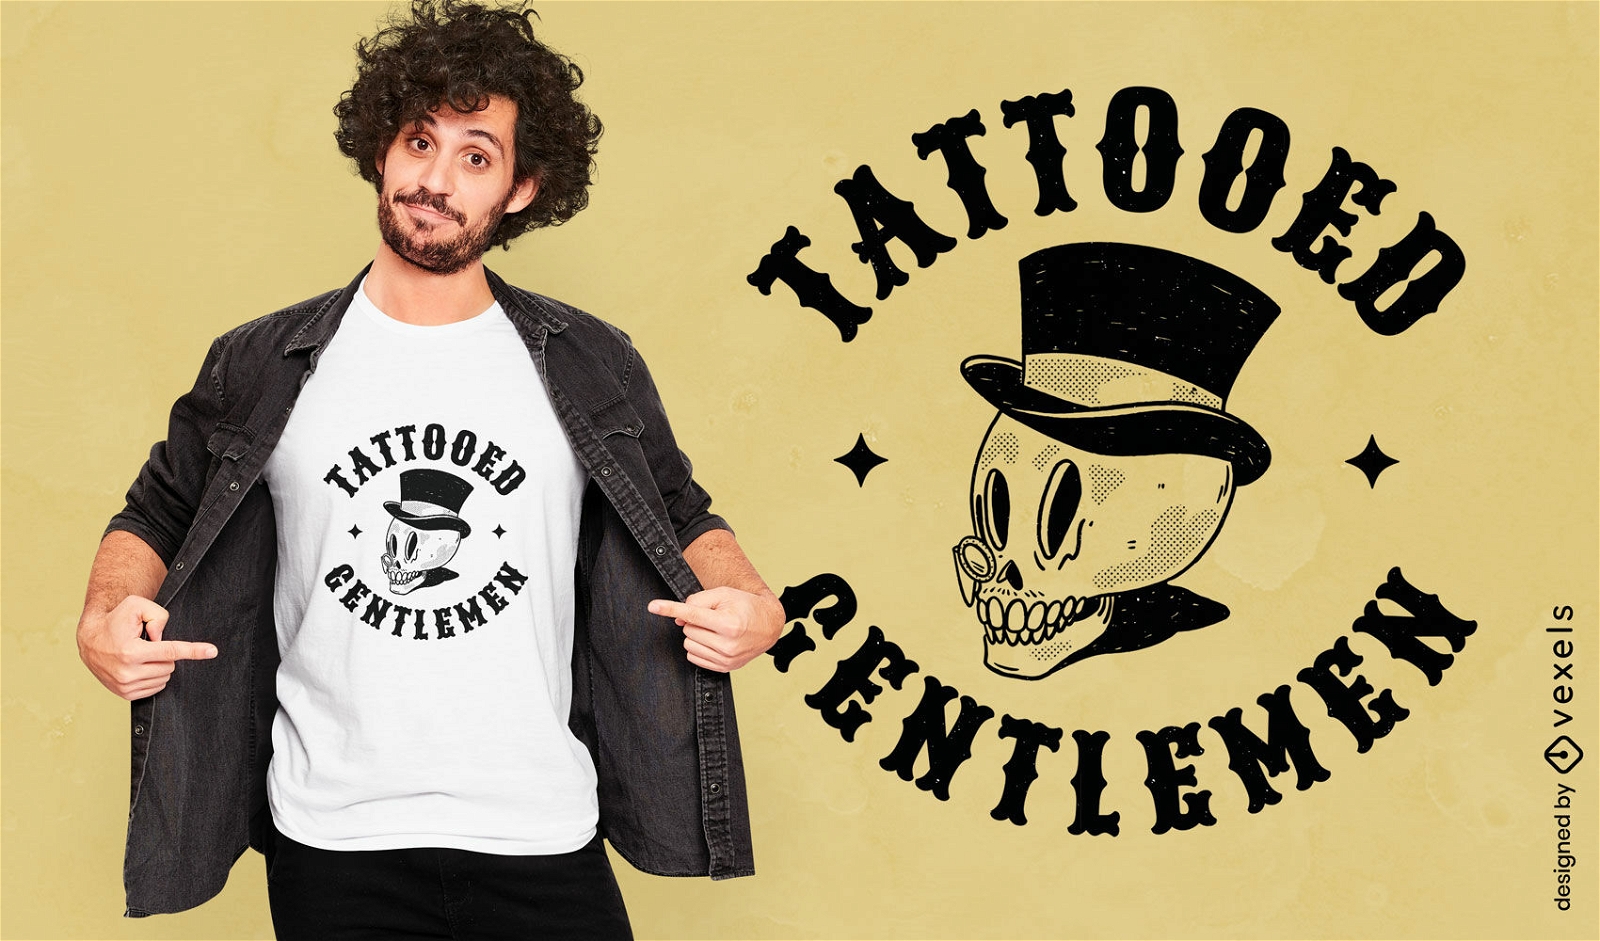 Tattooed gentlemen skull quote t-shirt design